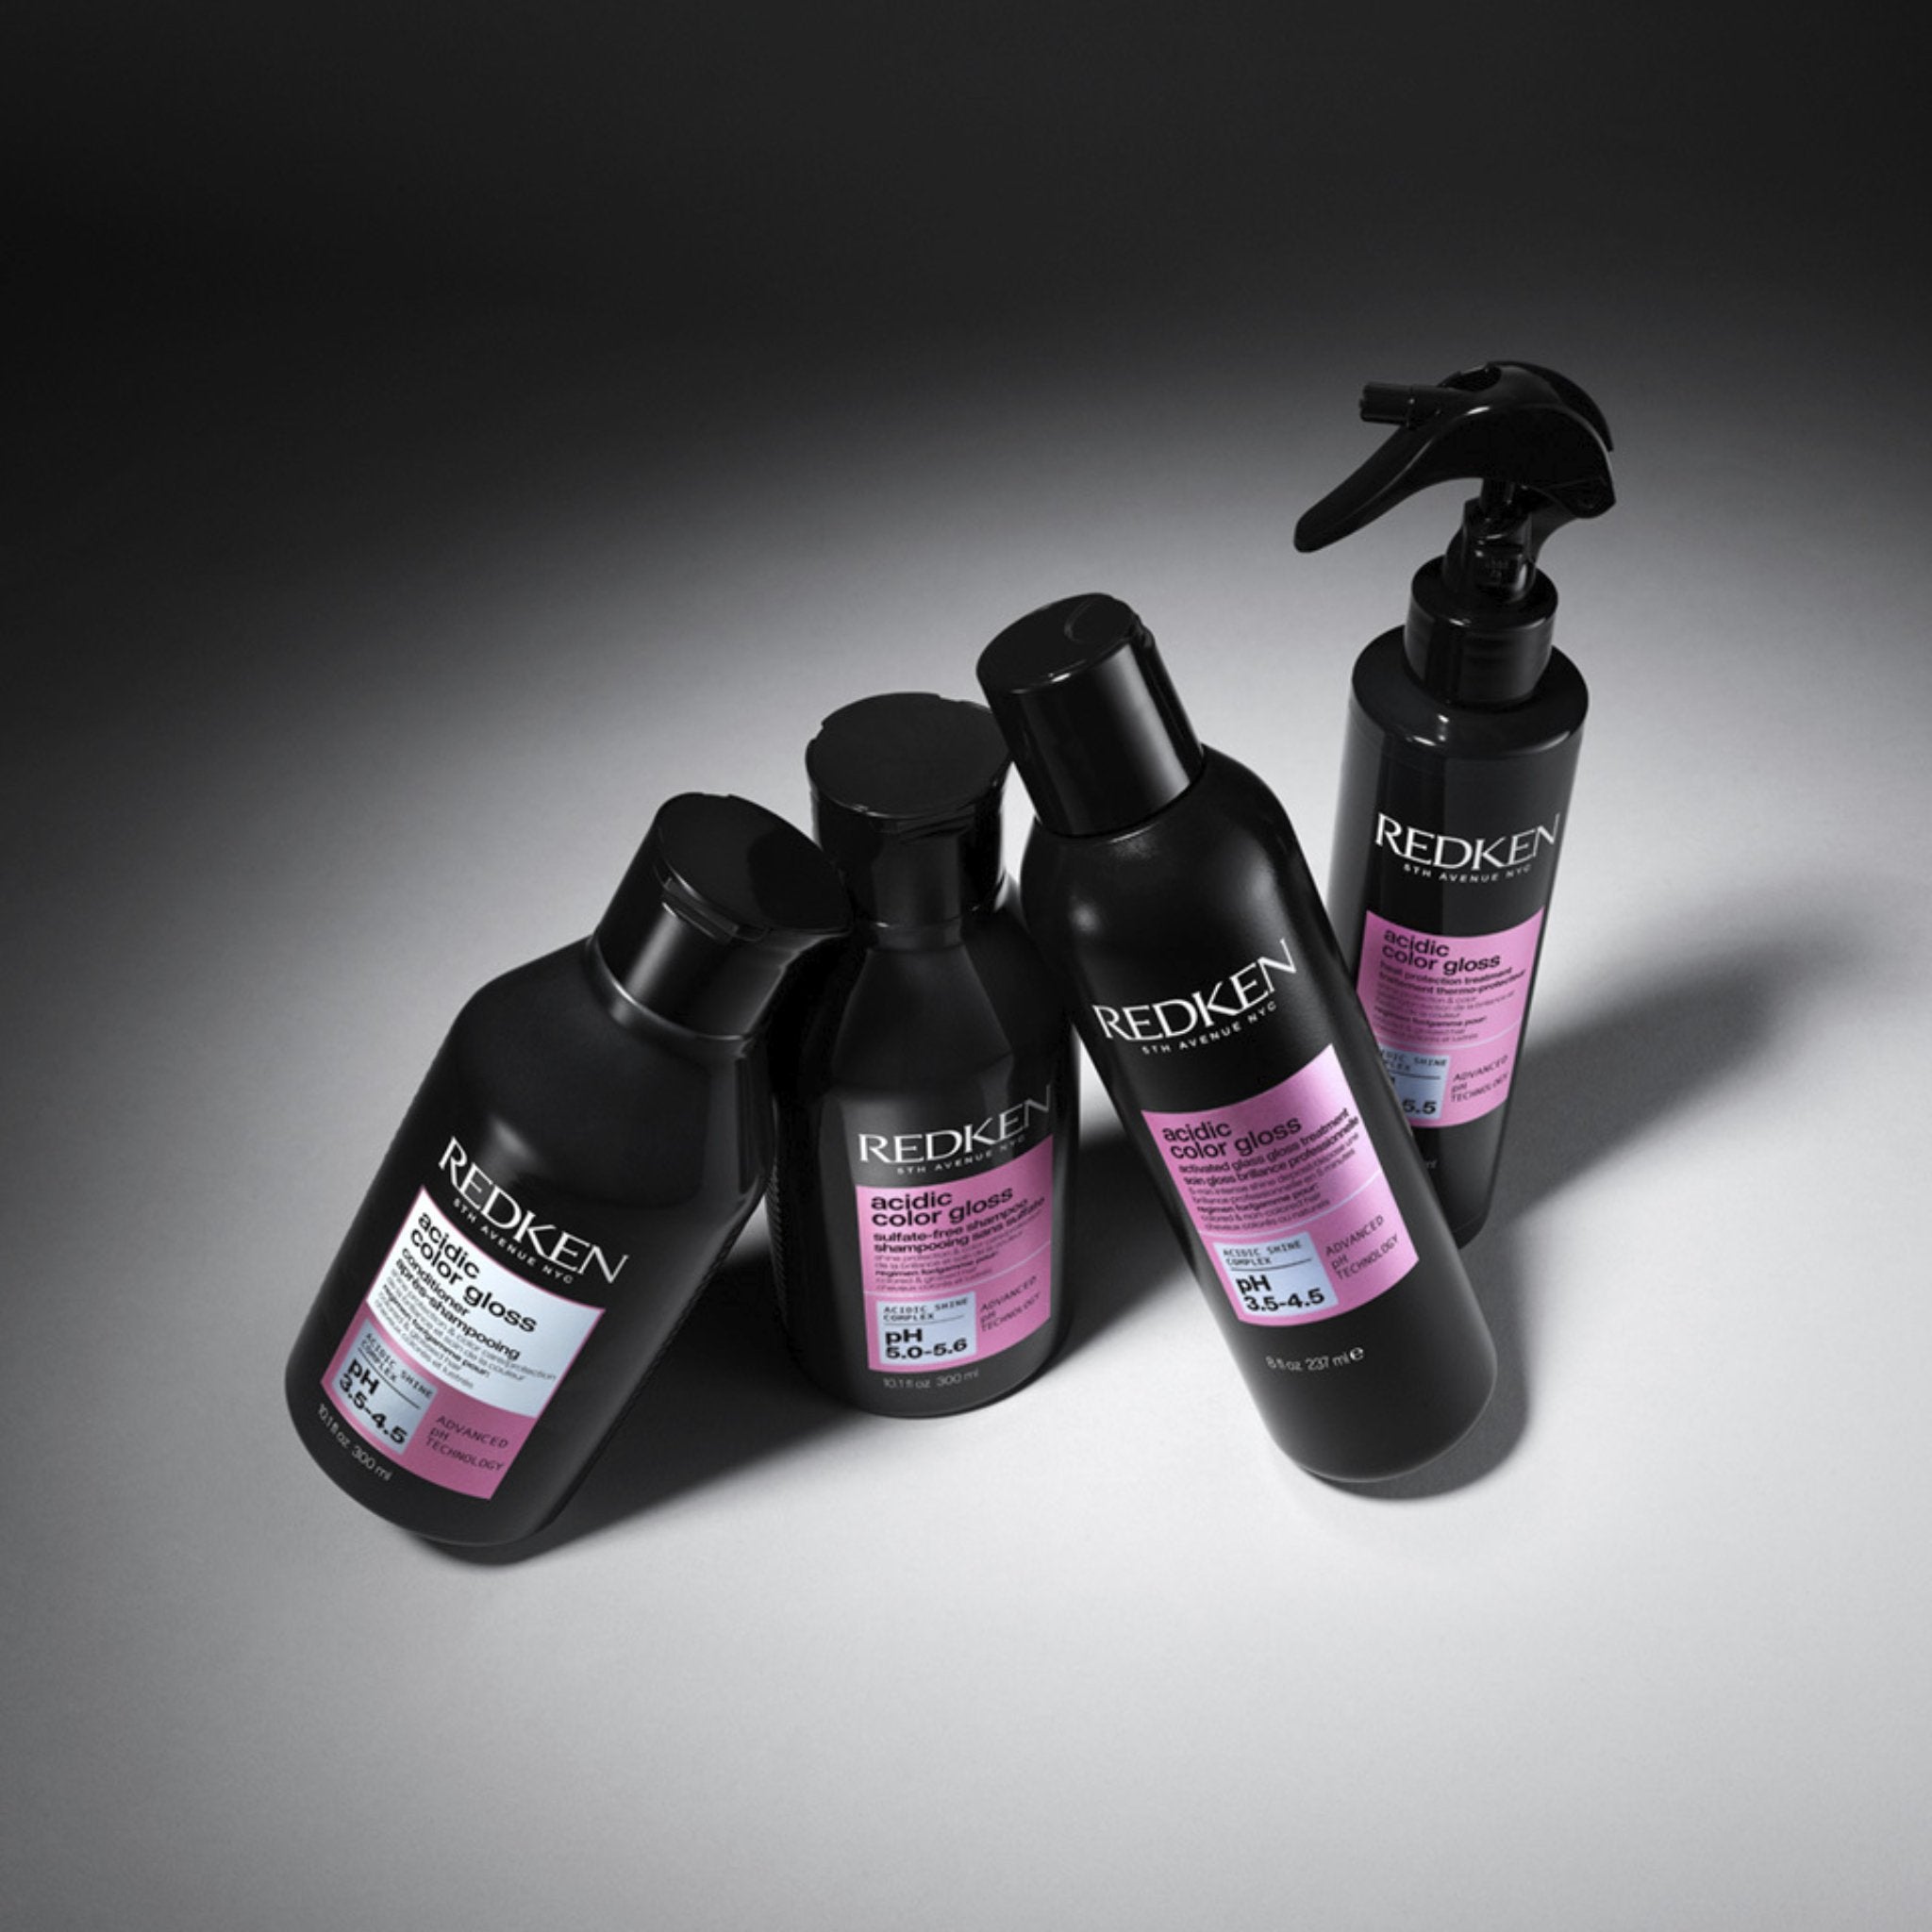 Redken. Shampoing Acidic Color Gloss - 300 ml - Concept C. Shop